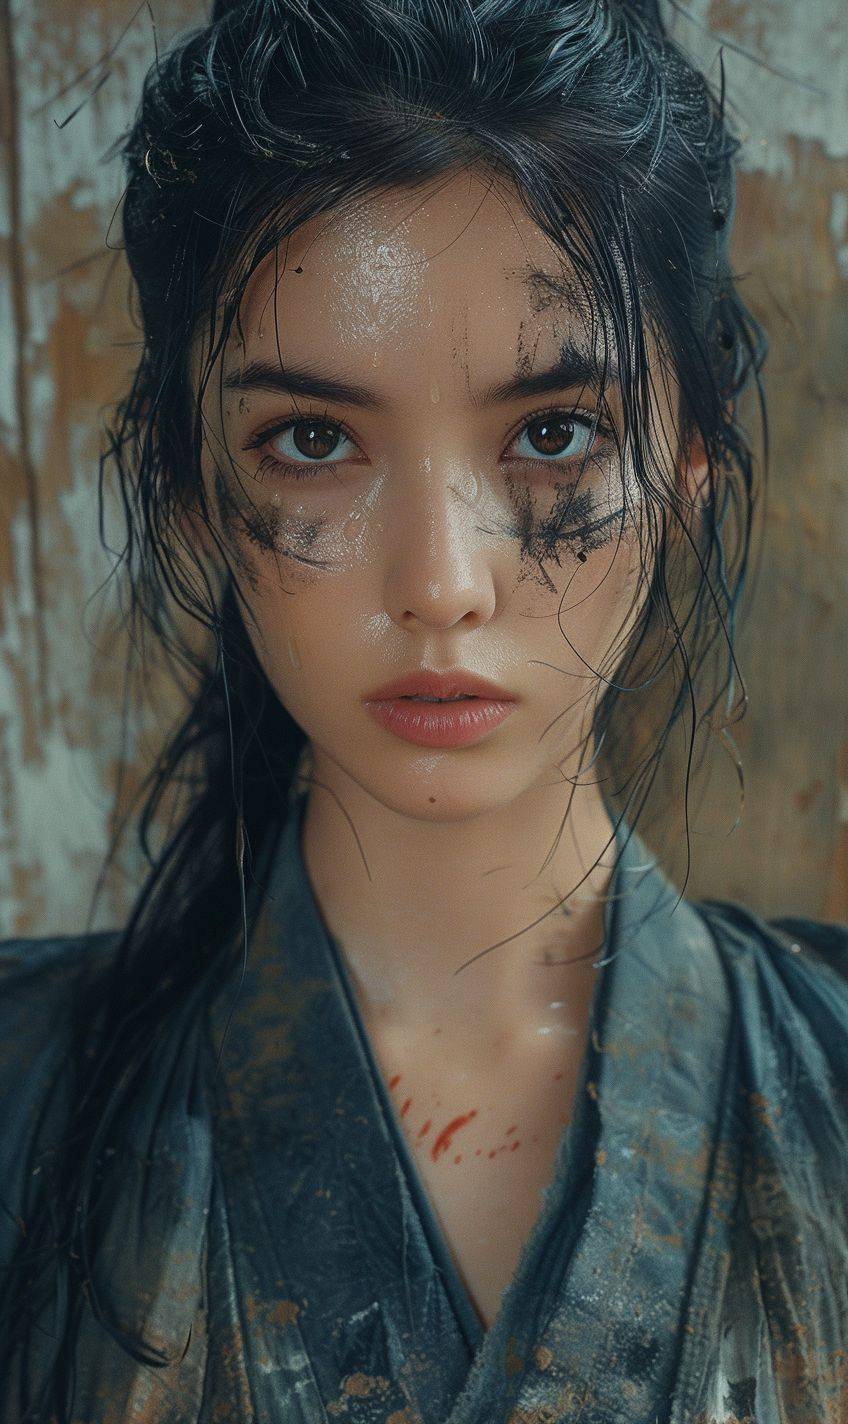 Samurai girl, in the style of cinematic realism, atmospheric impressionism, darkly romantic realism, pre-raphaelite realism, grainy, soft-focused realism